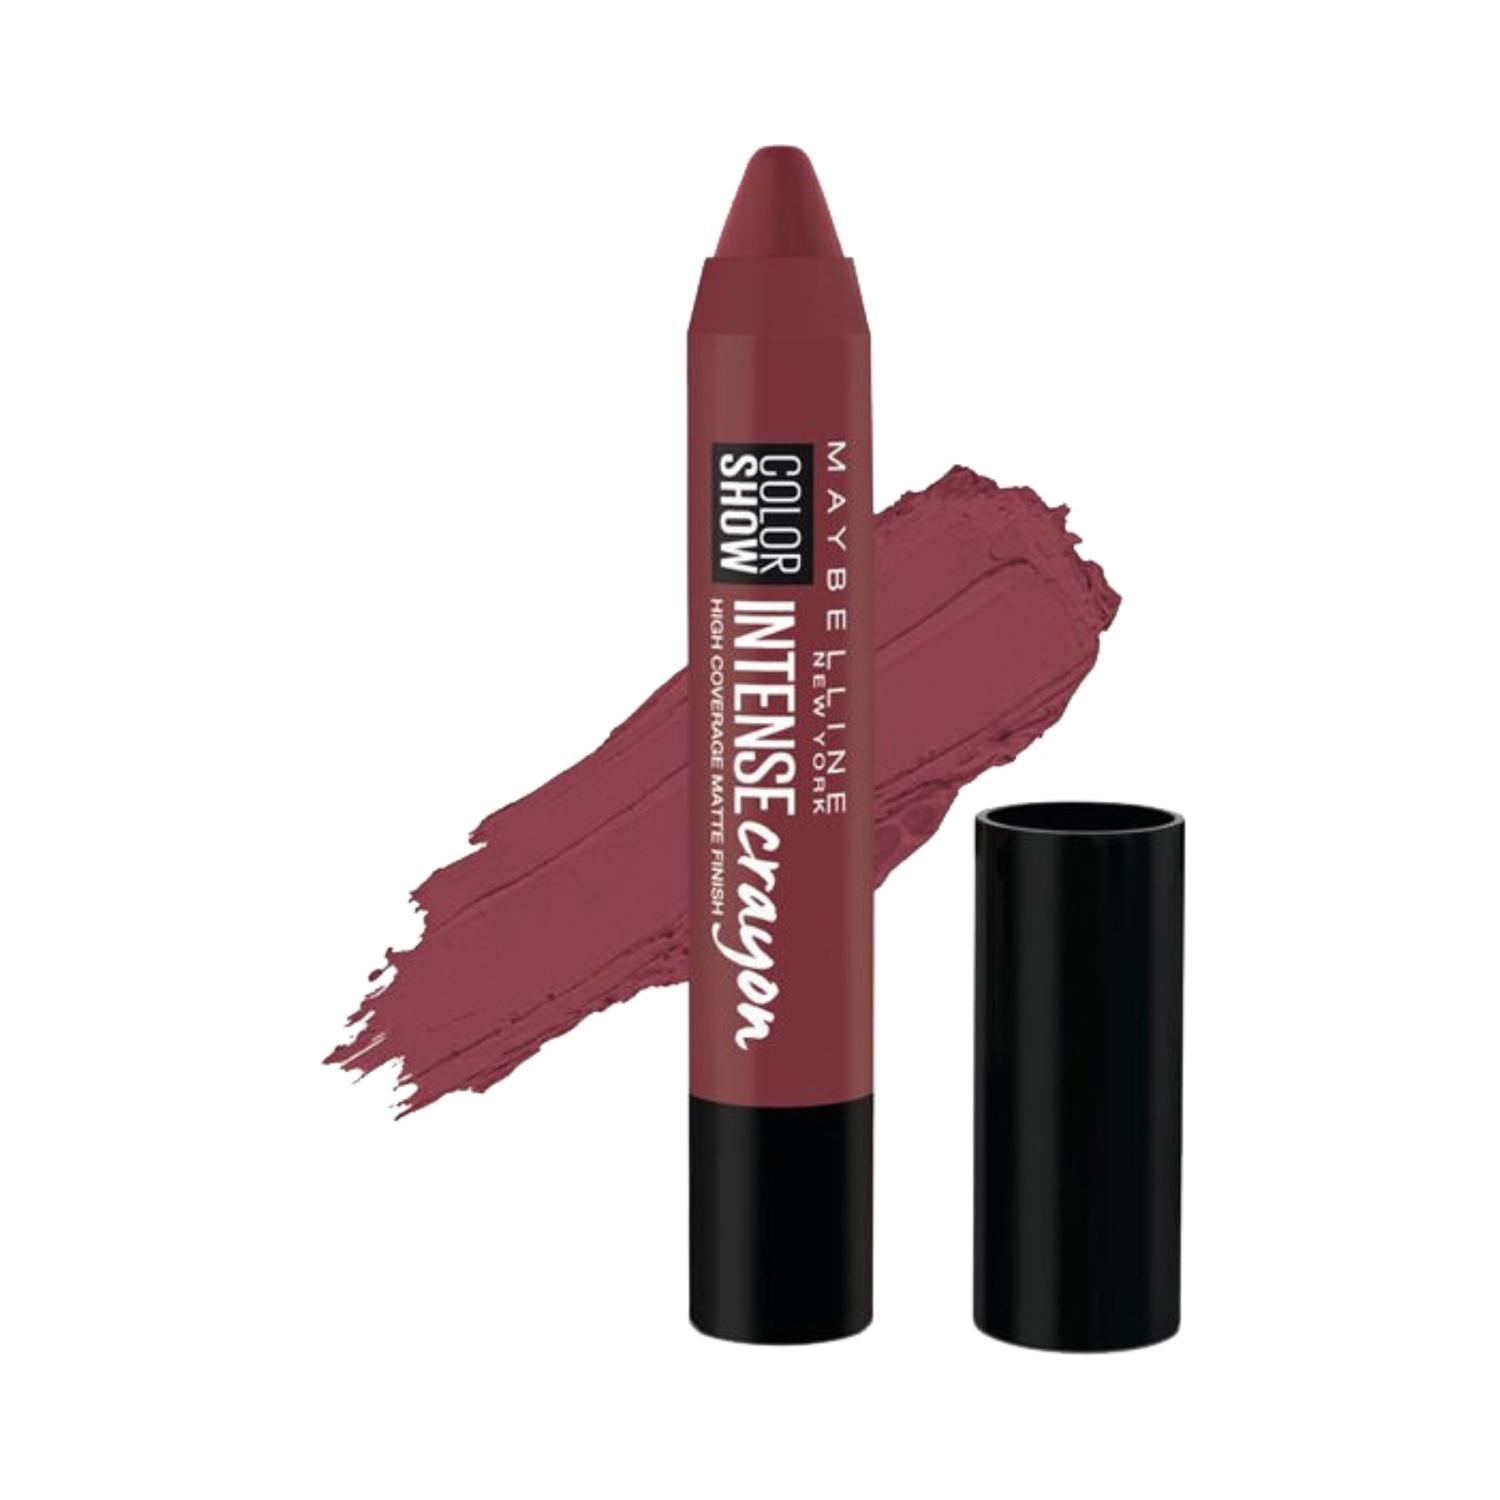 maybelline new york color show intense lip crayon spf 17 - bold burgundy (3.5g)